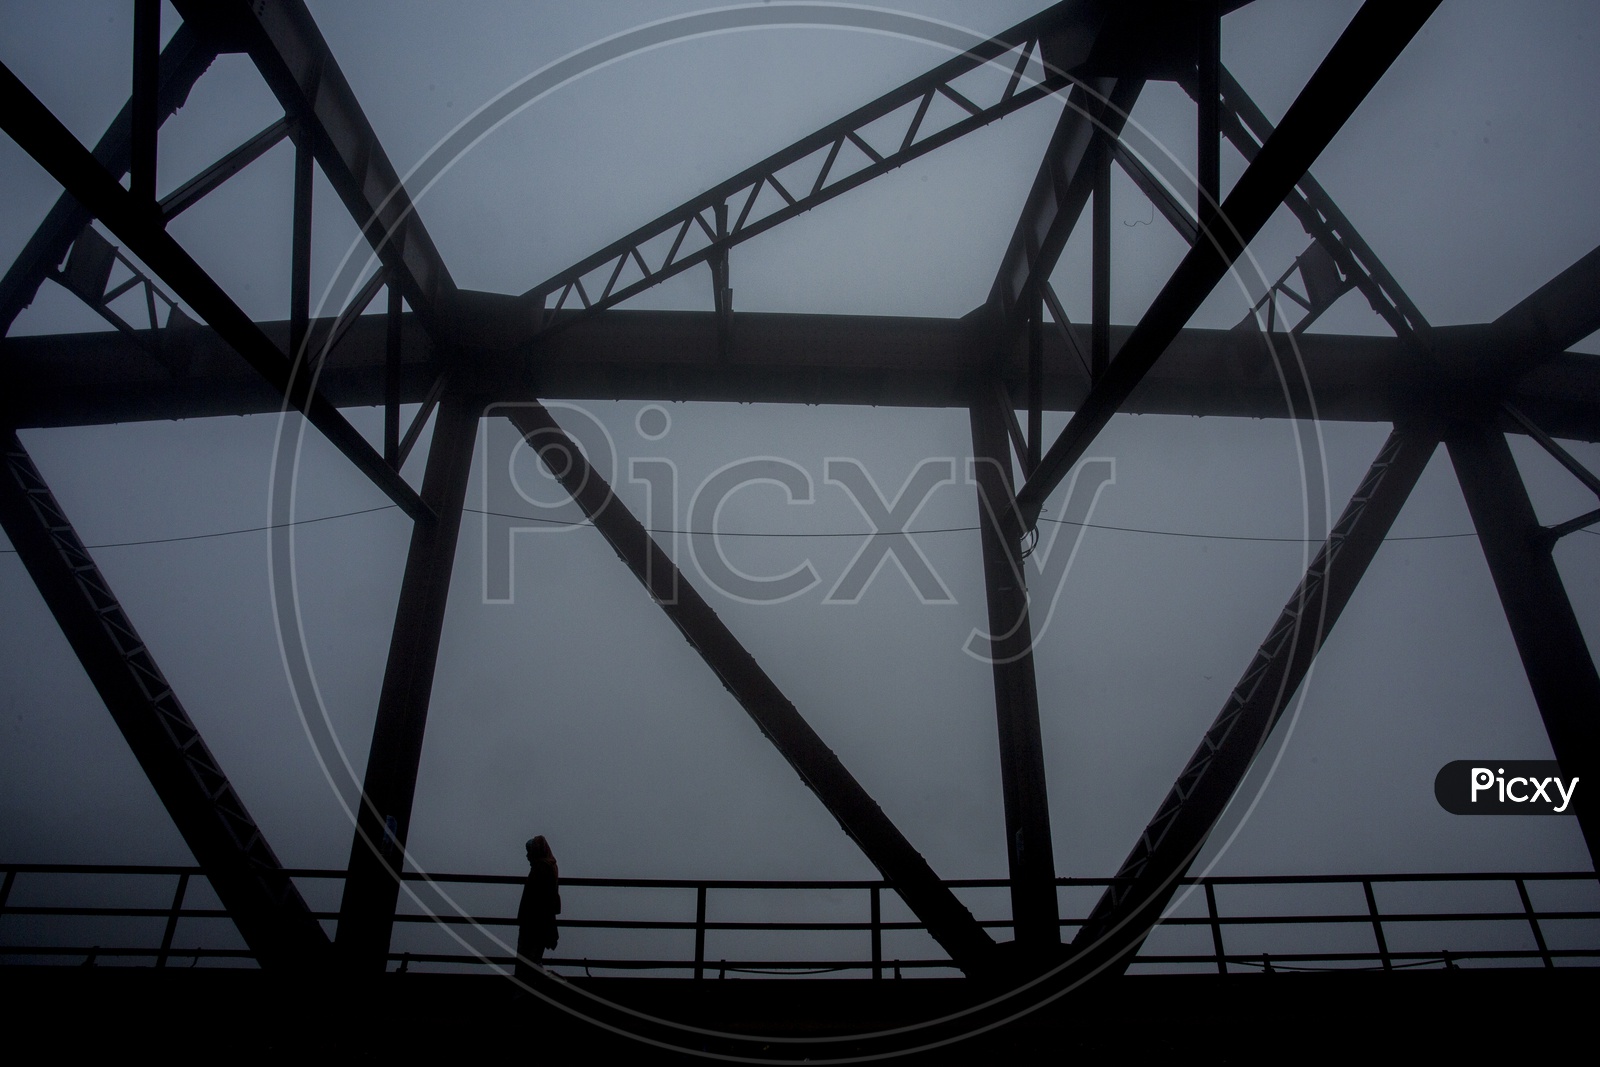 Foggy Mornings Of Varanasi / Foggy Views Of Railway Bridge Over River Ganga in Varanasi